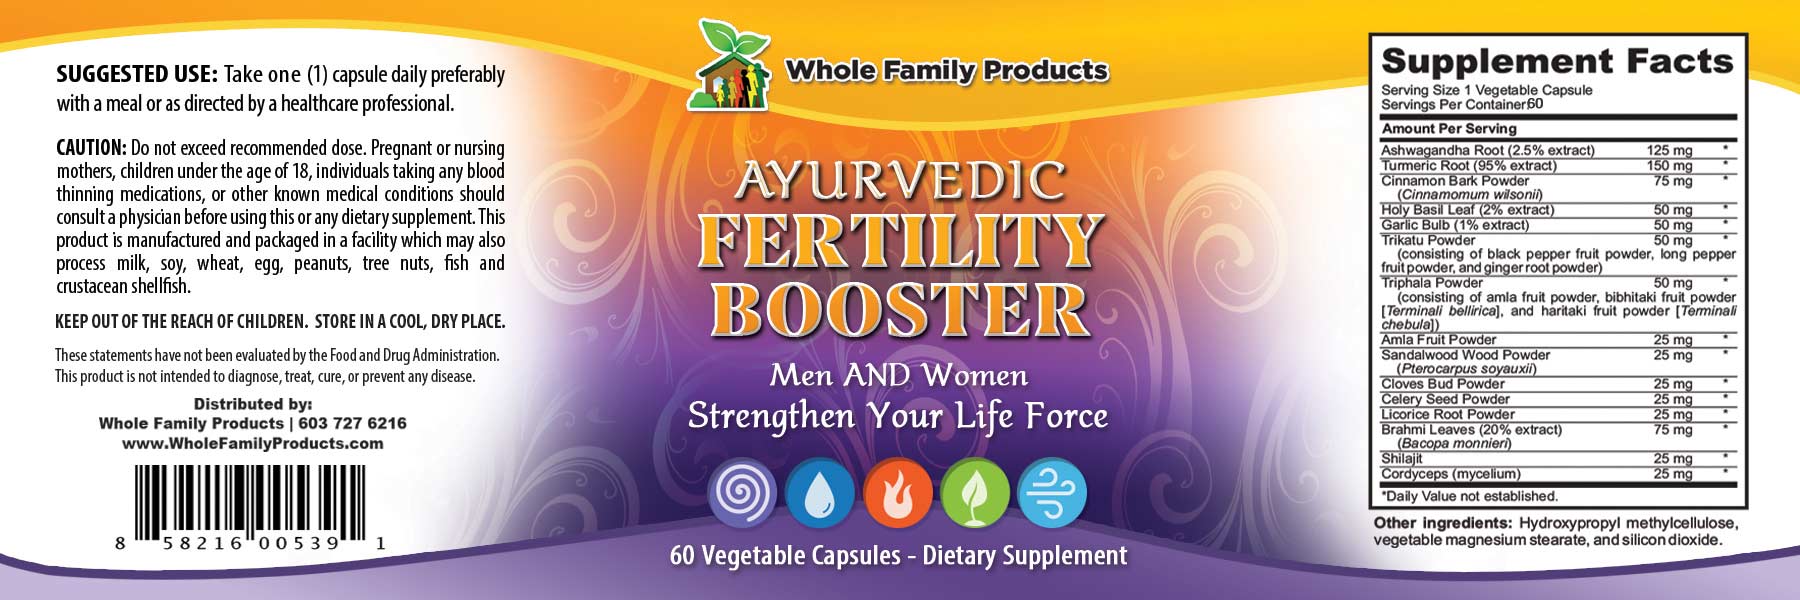 Ayurvedic Fertility Booster 60 Capsules Label